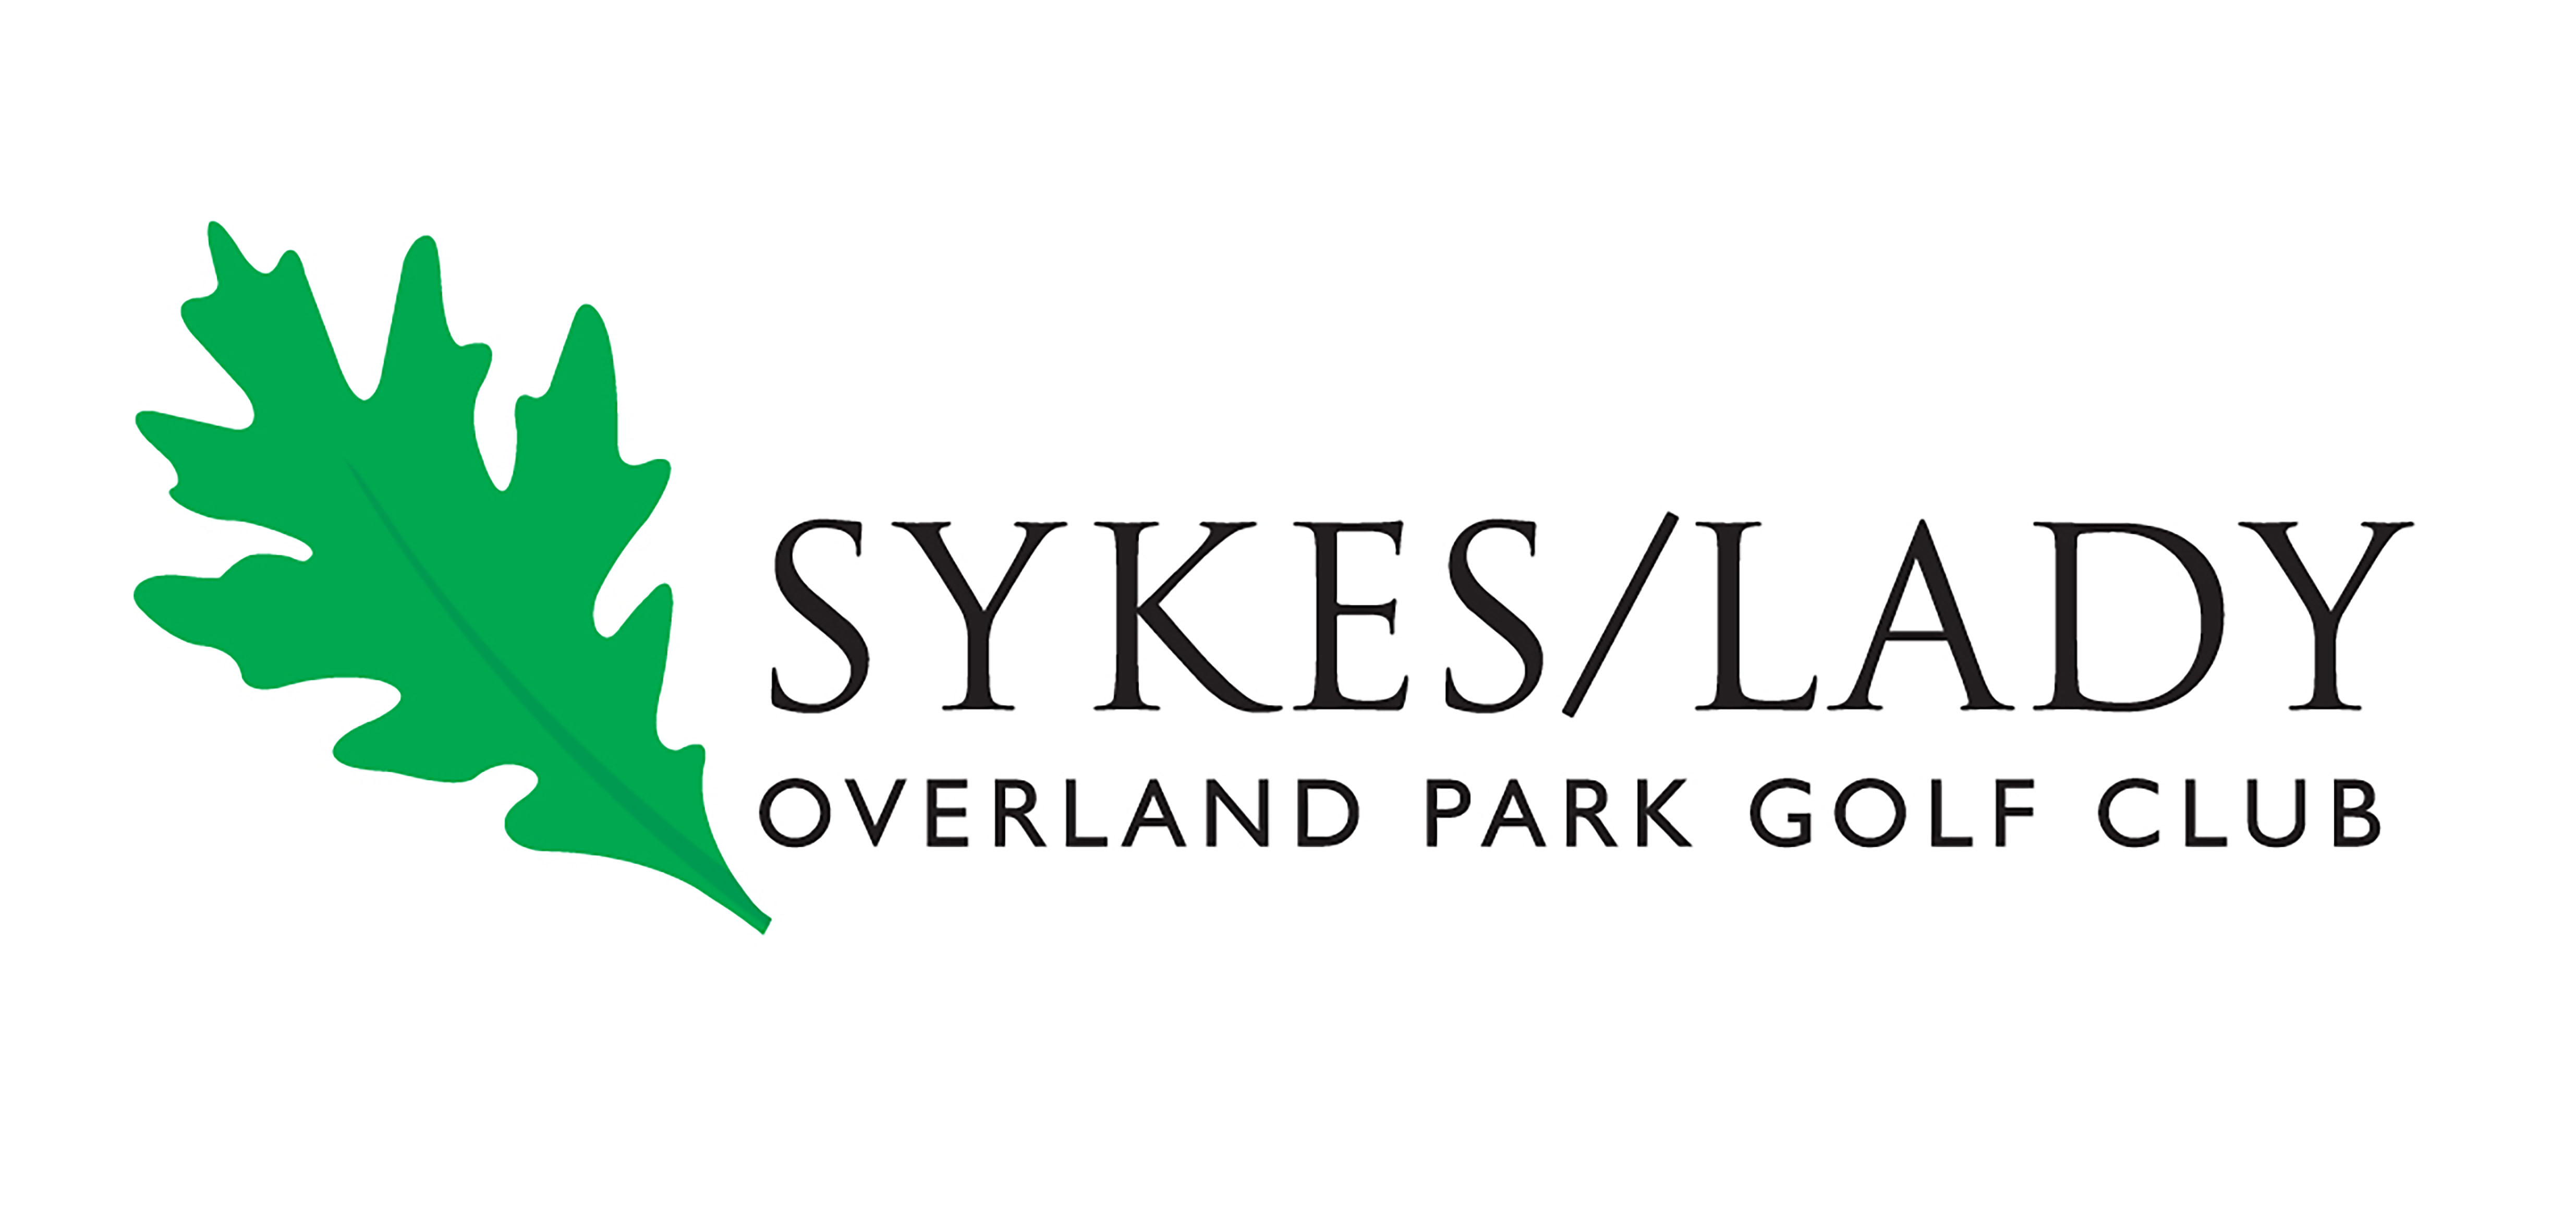 SykesLady OverlandPark Golf 3c horz200